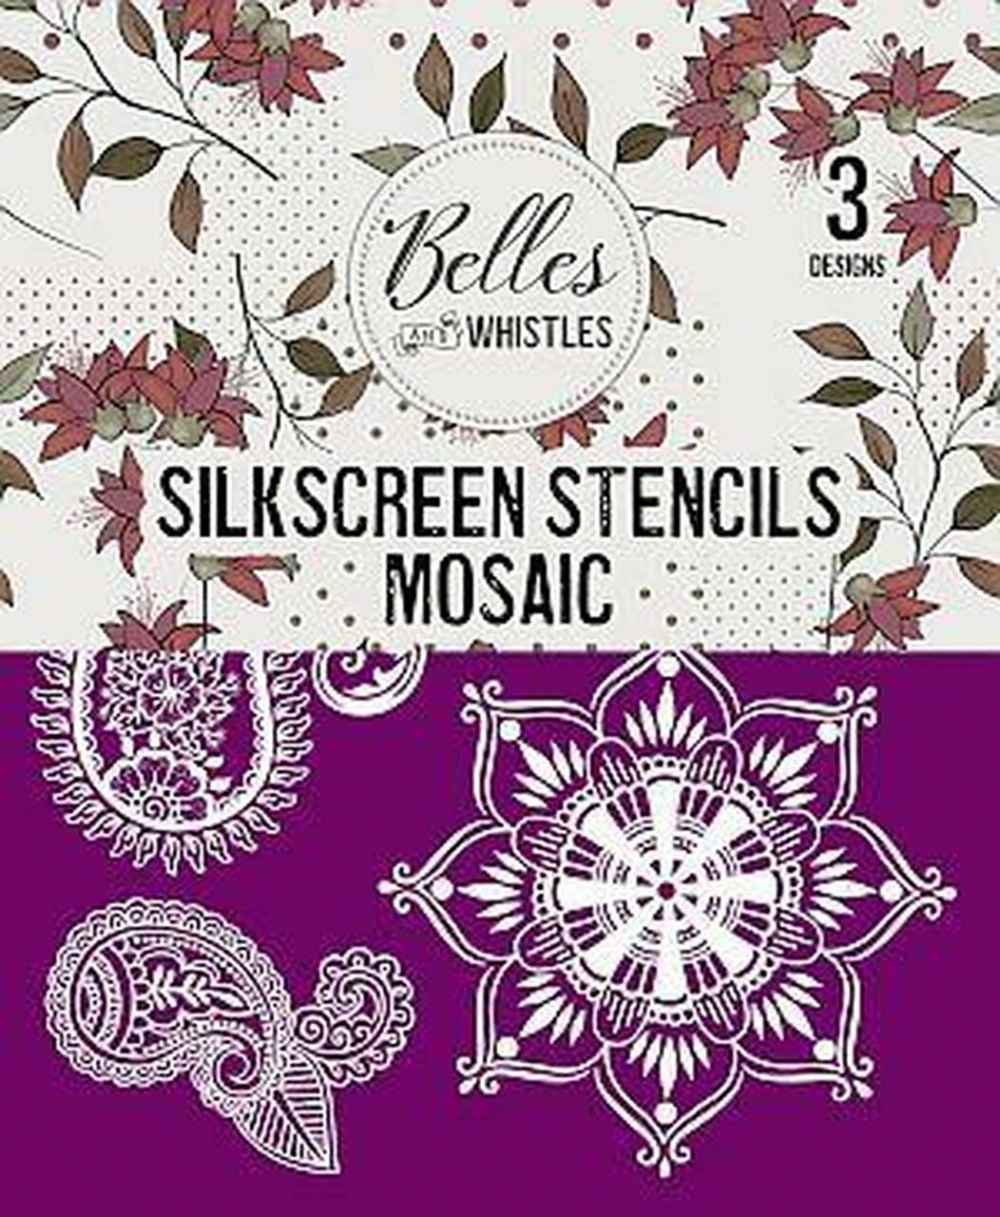 Belles and Whistles Silkscreen Stencil – Lightweight Adhesive – Reusable – Mosaic 20x25cm